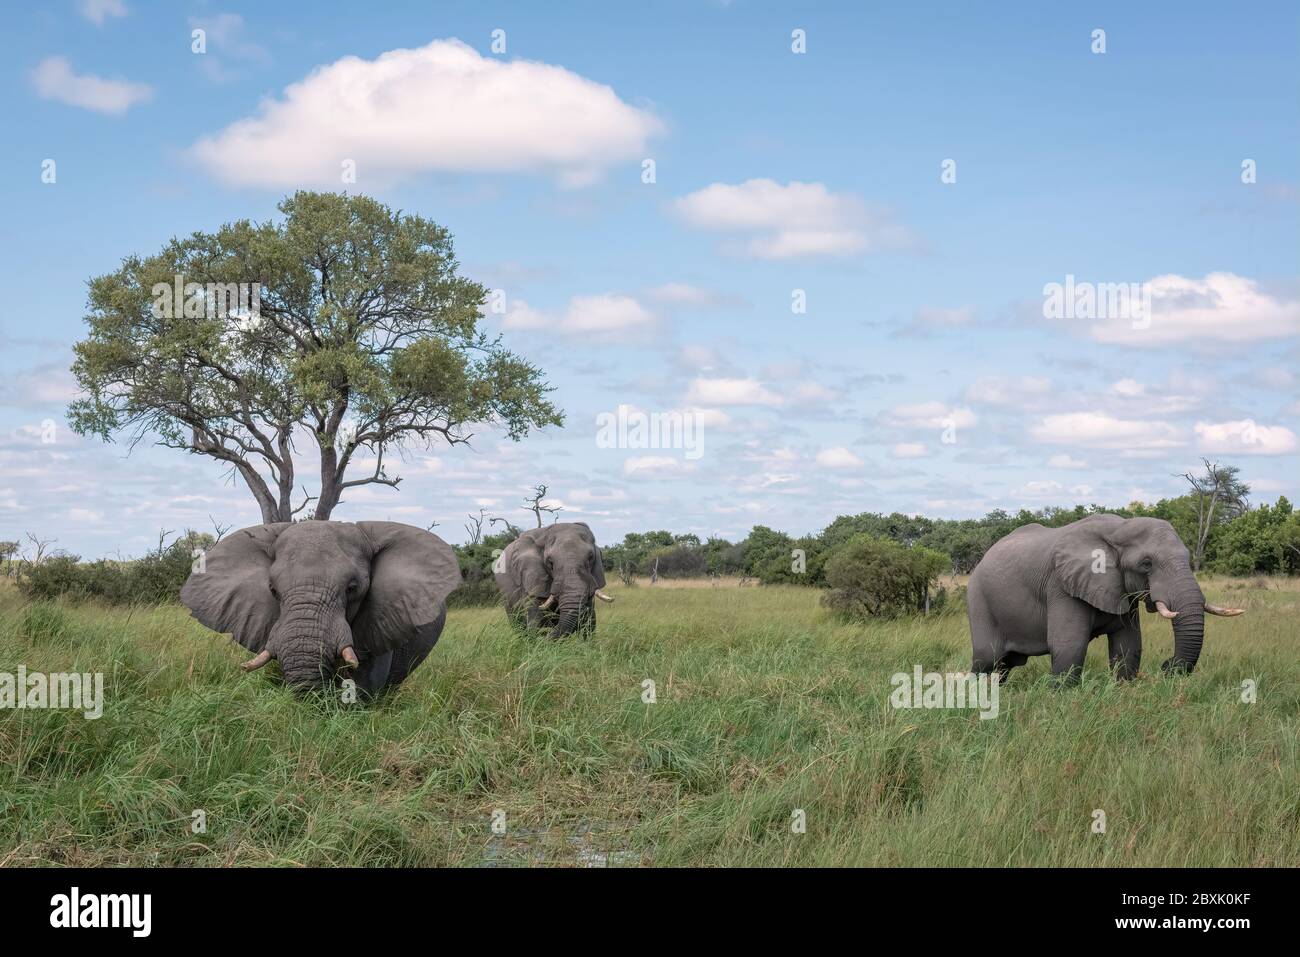 Three wild elephants feed on lush green grass. Image taken in the Okavango Delta, Botswana. Stock Photo